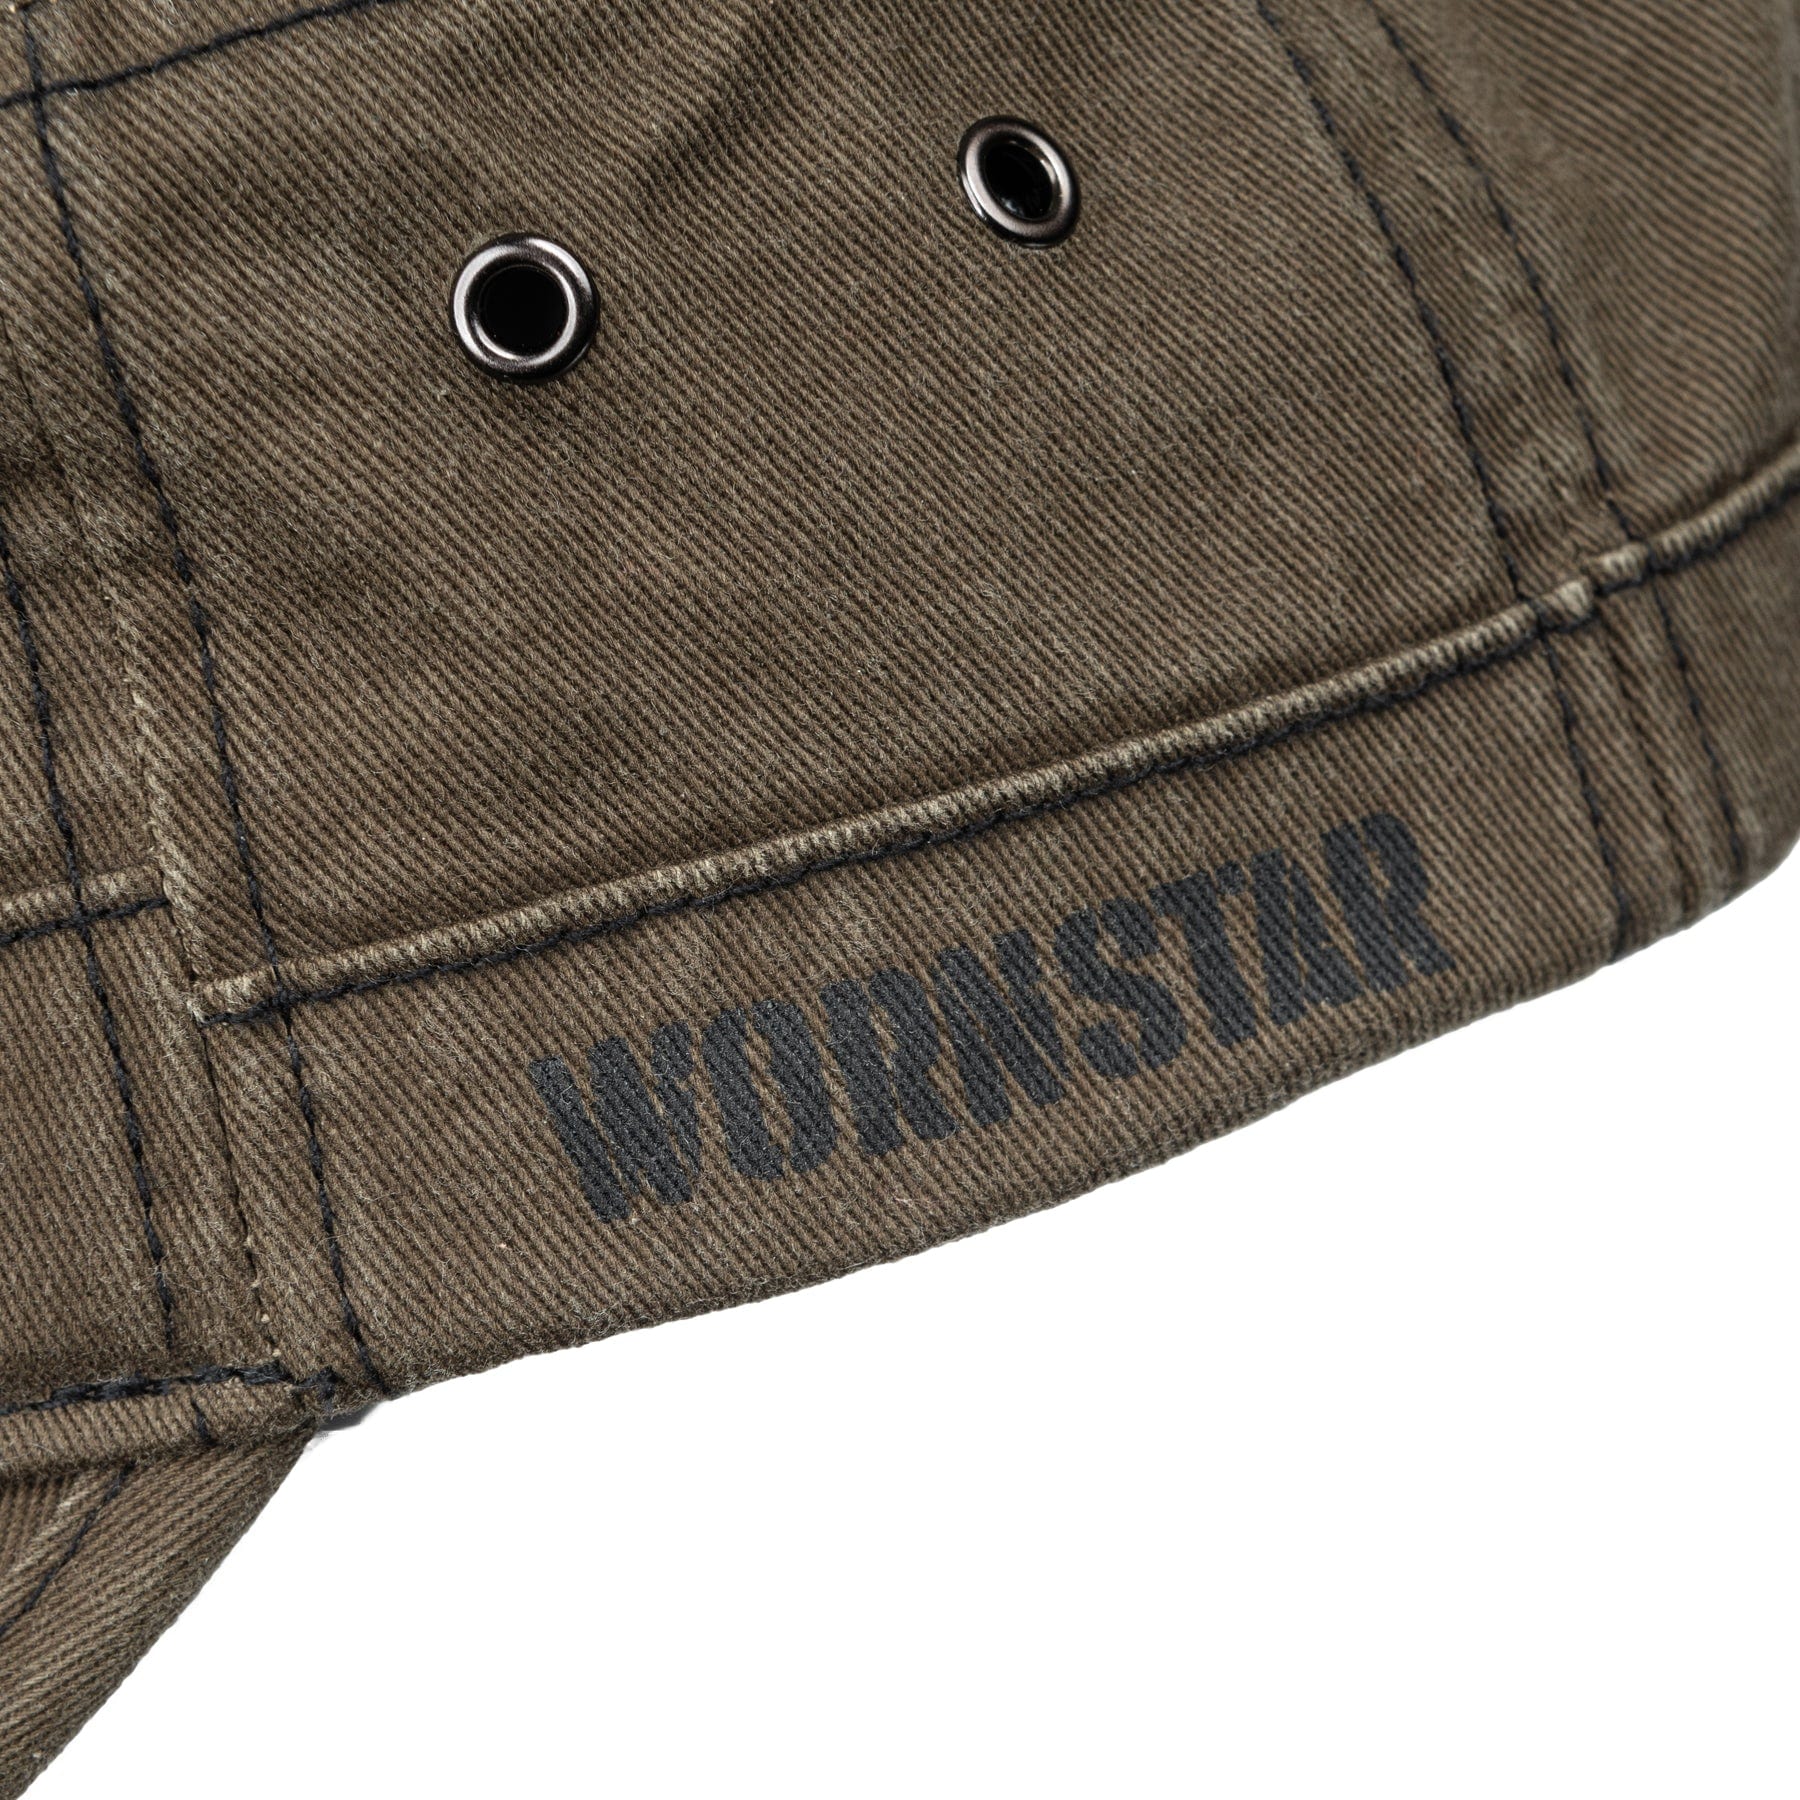 Wornstar Clothing Hat Ranger Cadet Hat